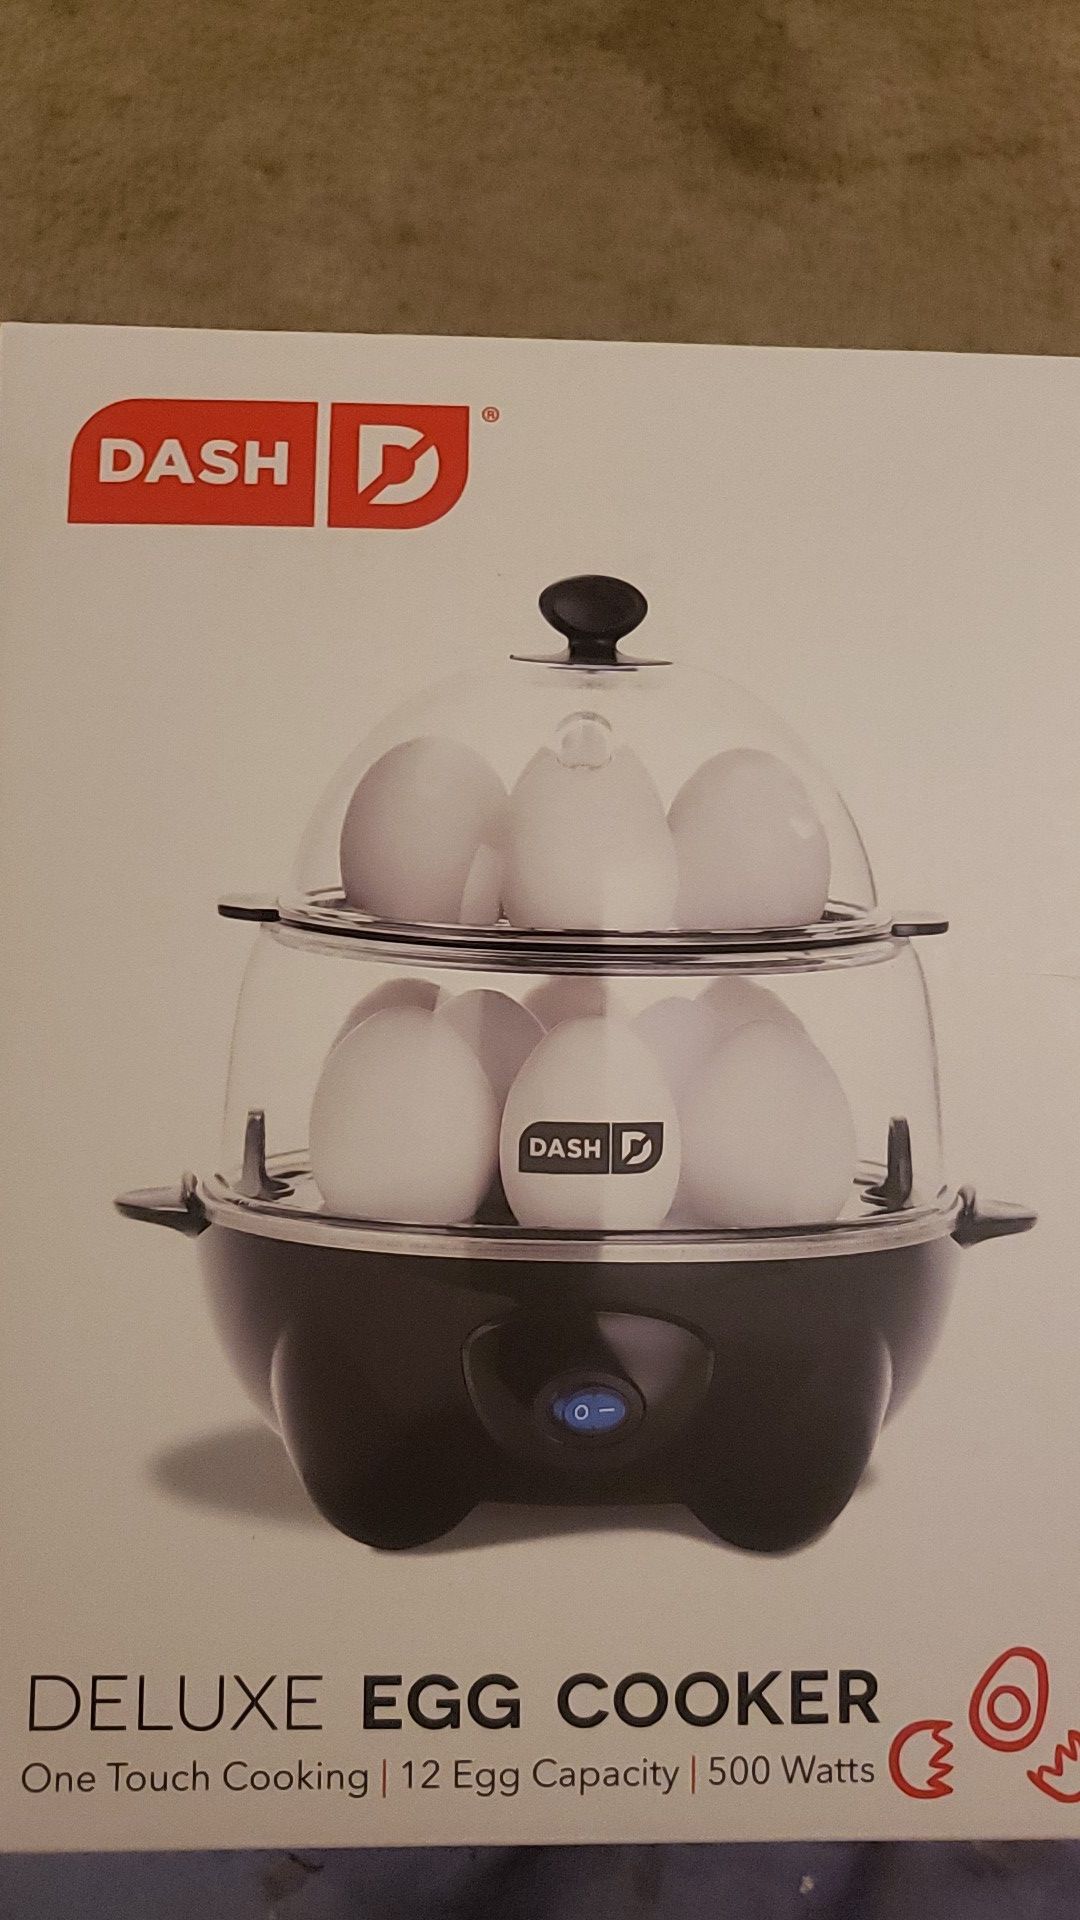 Deluxe Egg cooker